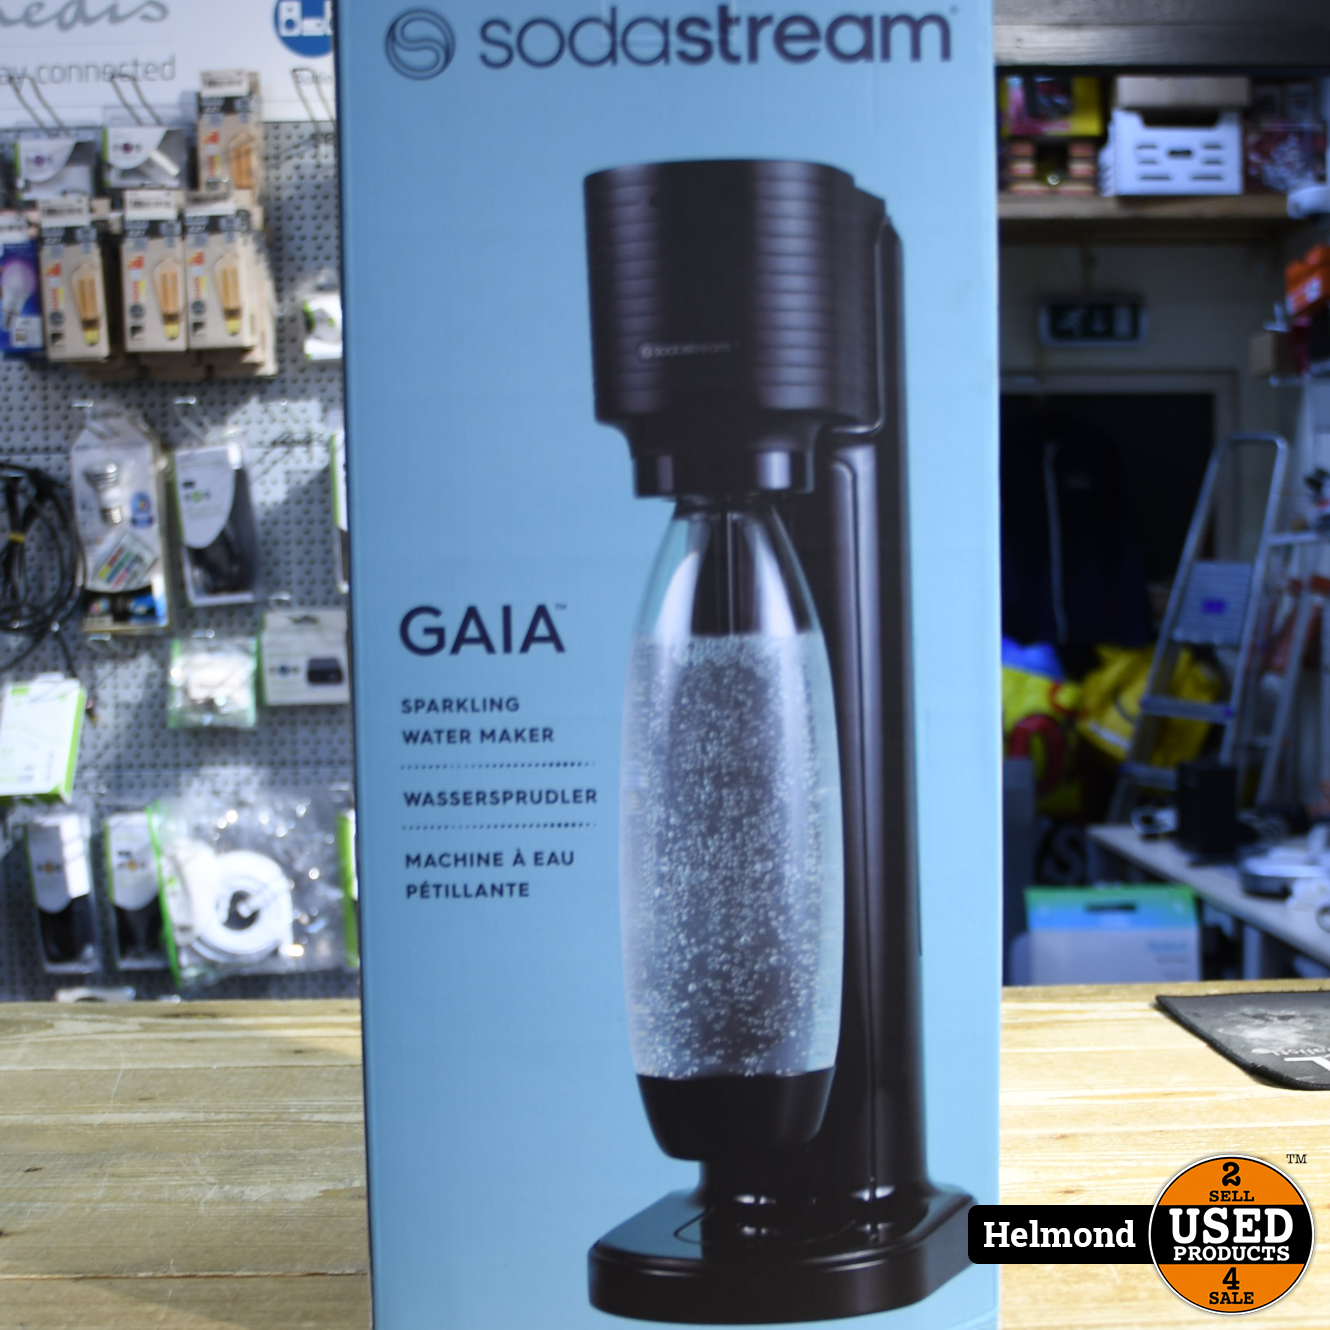 How to use sodastream gaia 